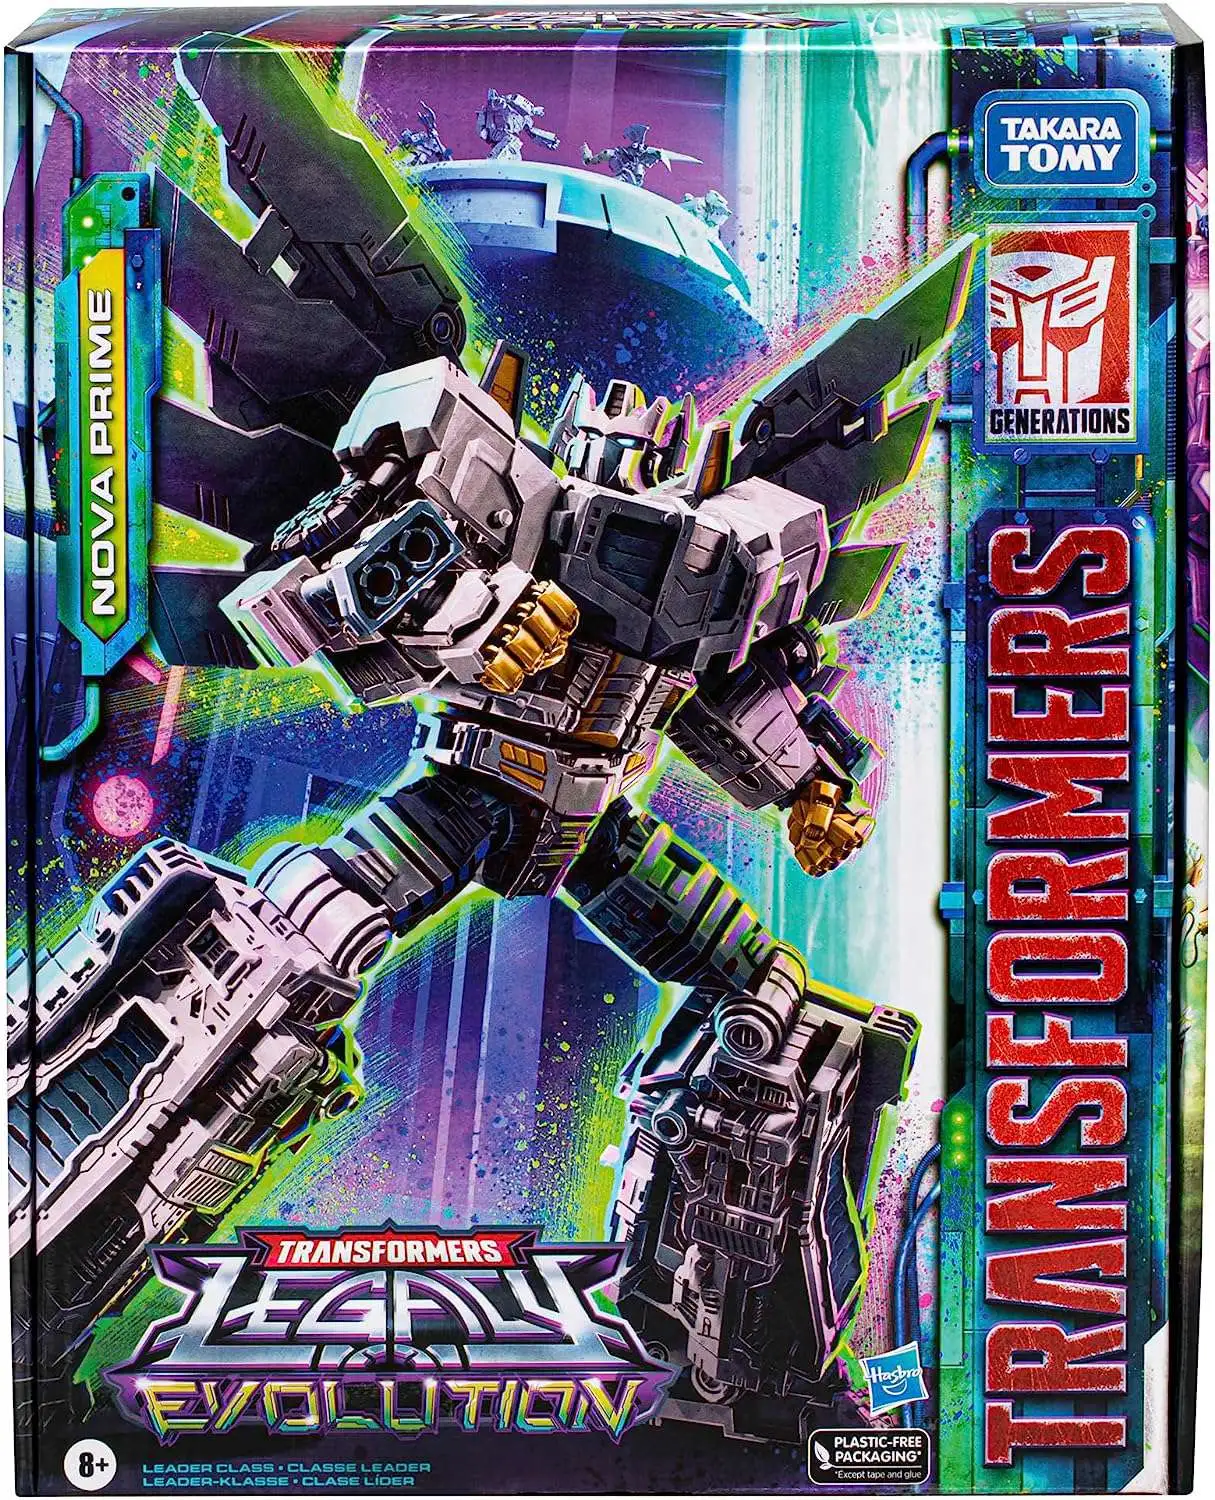 Transformers Generations Legacy Evolution Nova Prime Exclusive Leader  Action Figure